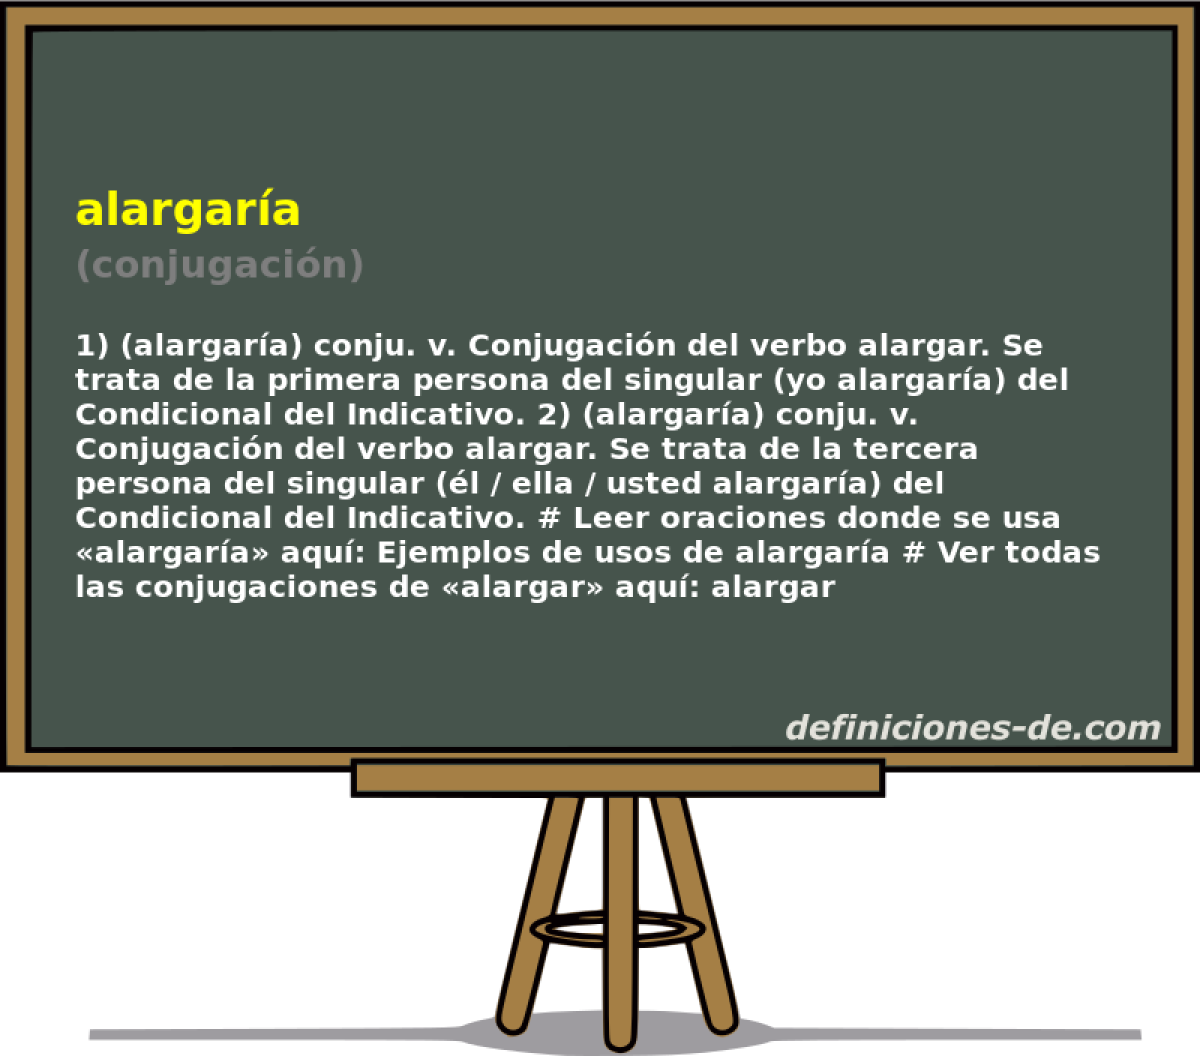 alargara (conjugacin)